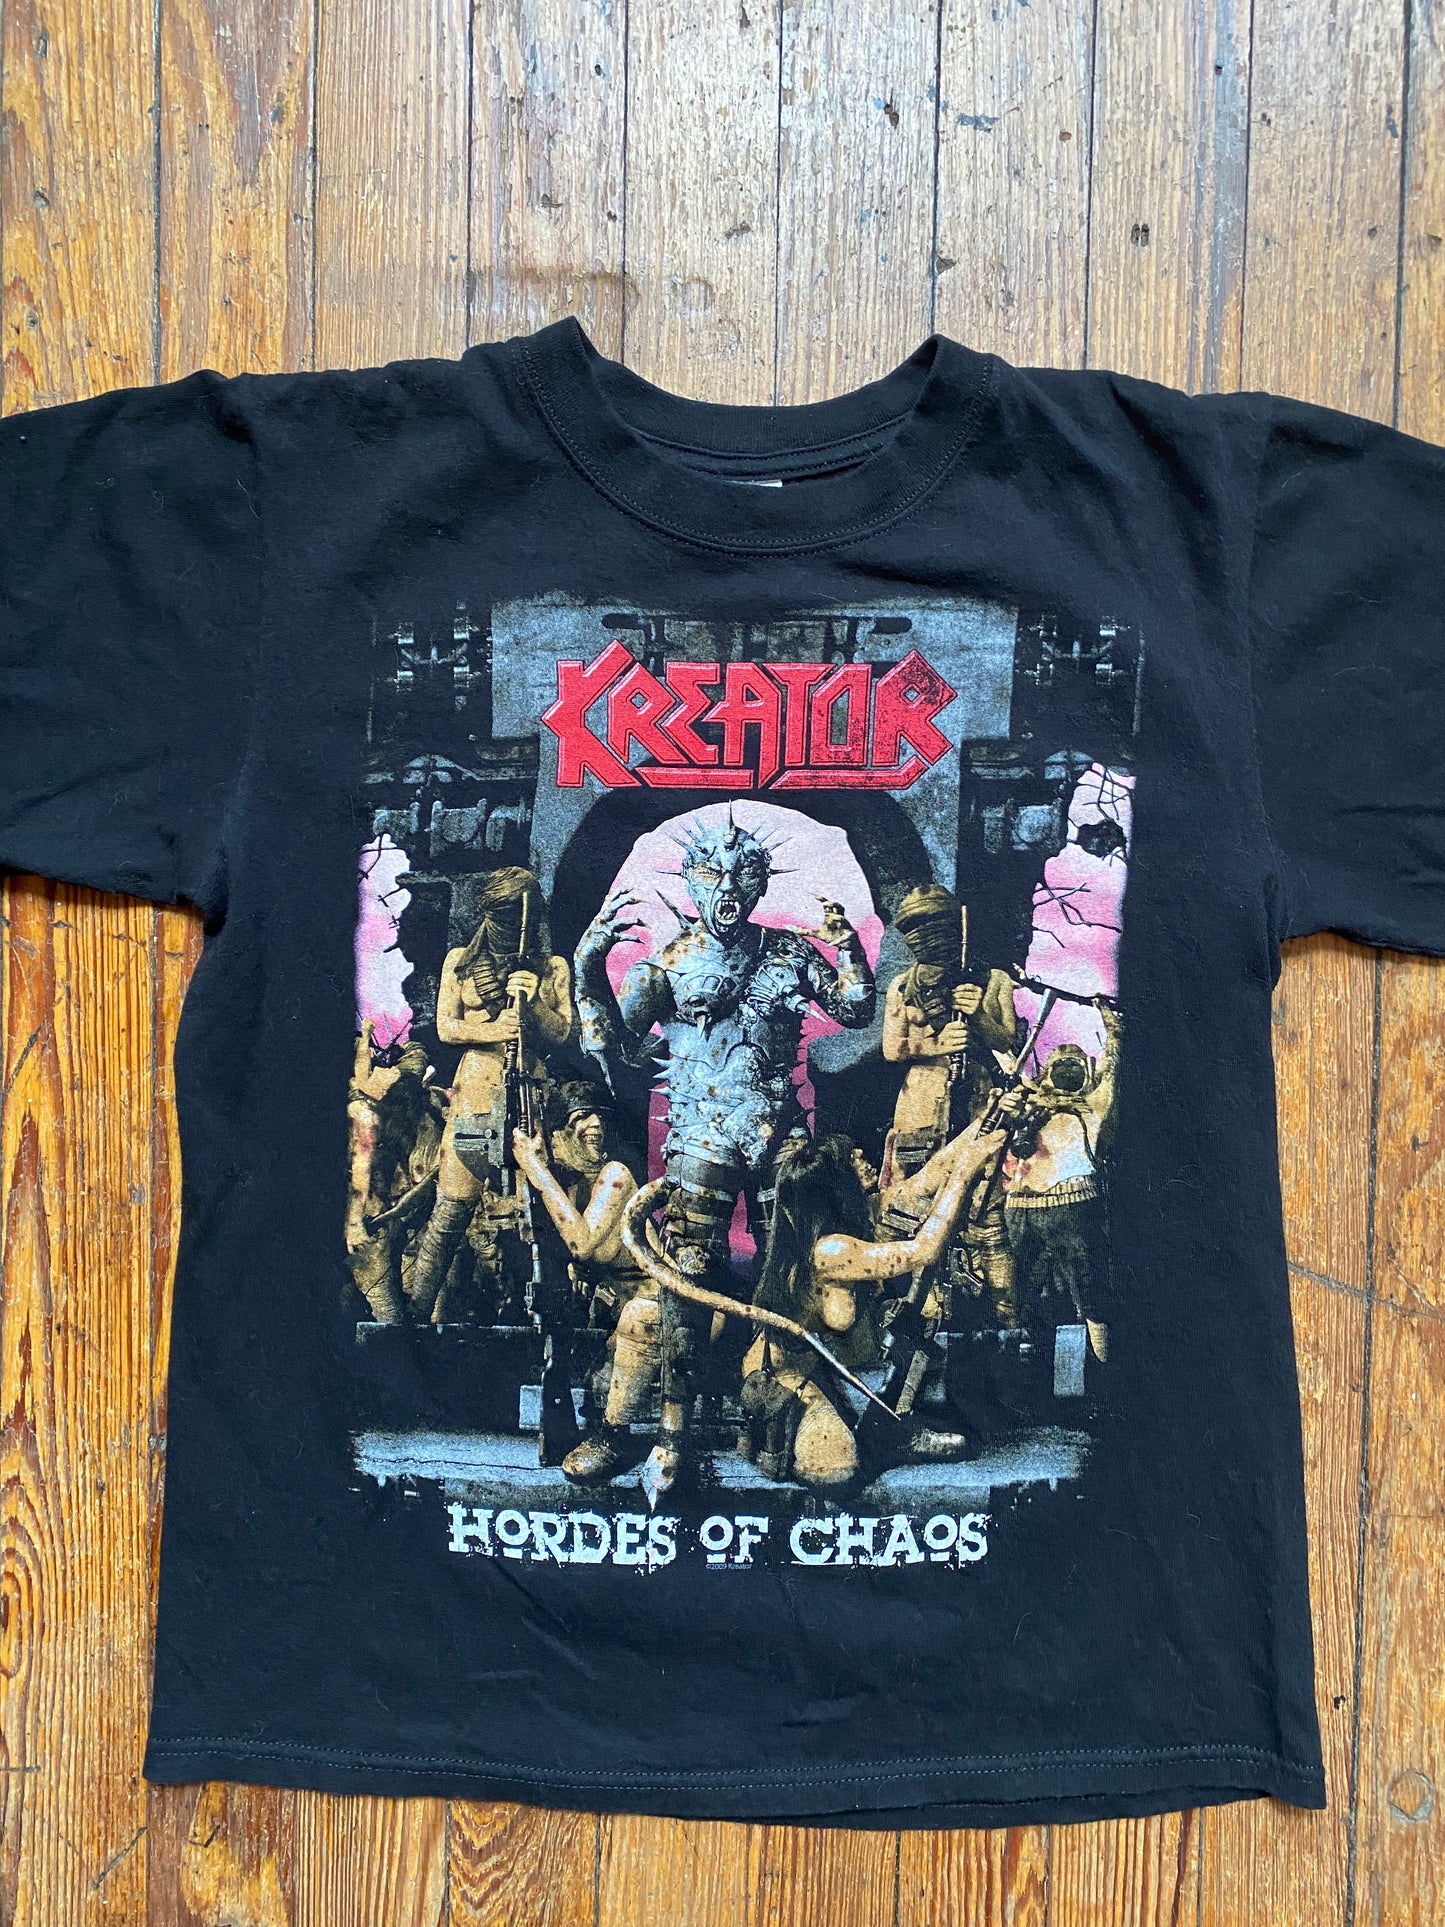 Kreator “Hordes of Chaos” 2015 Tour Shirt